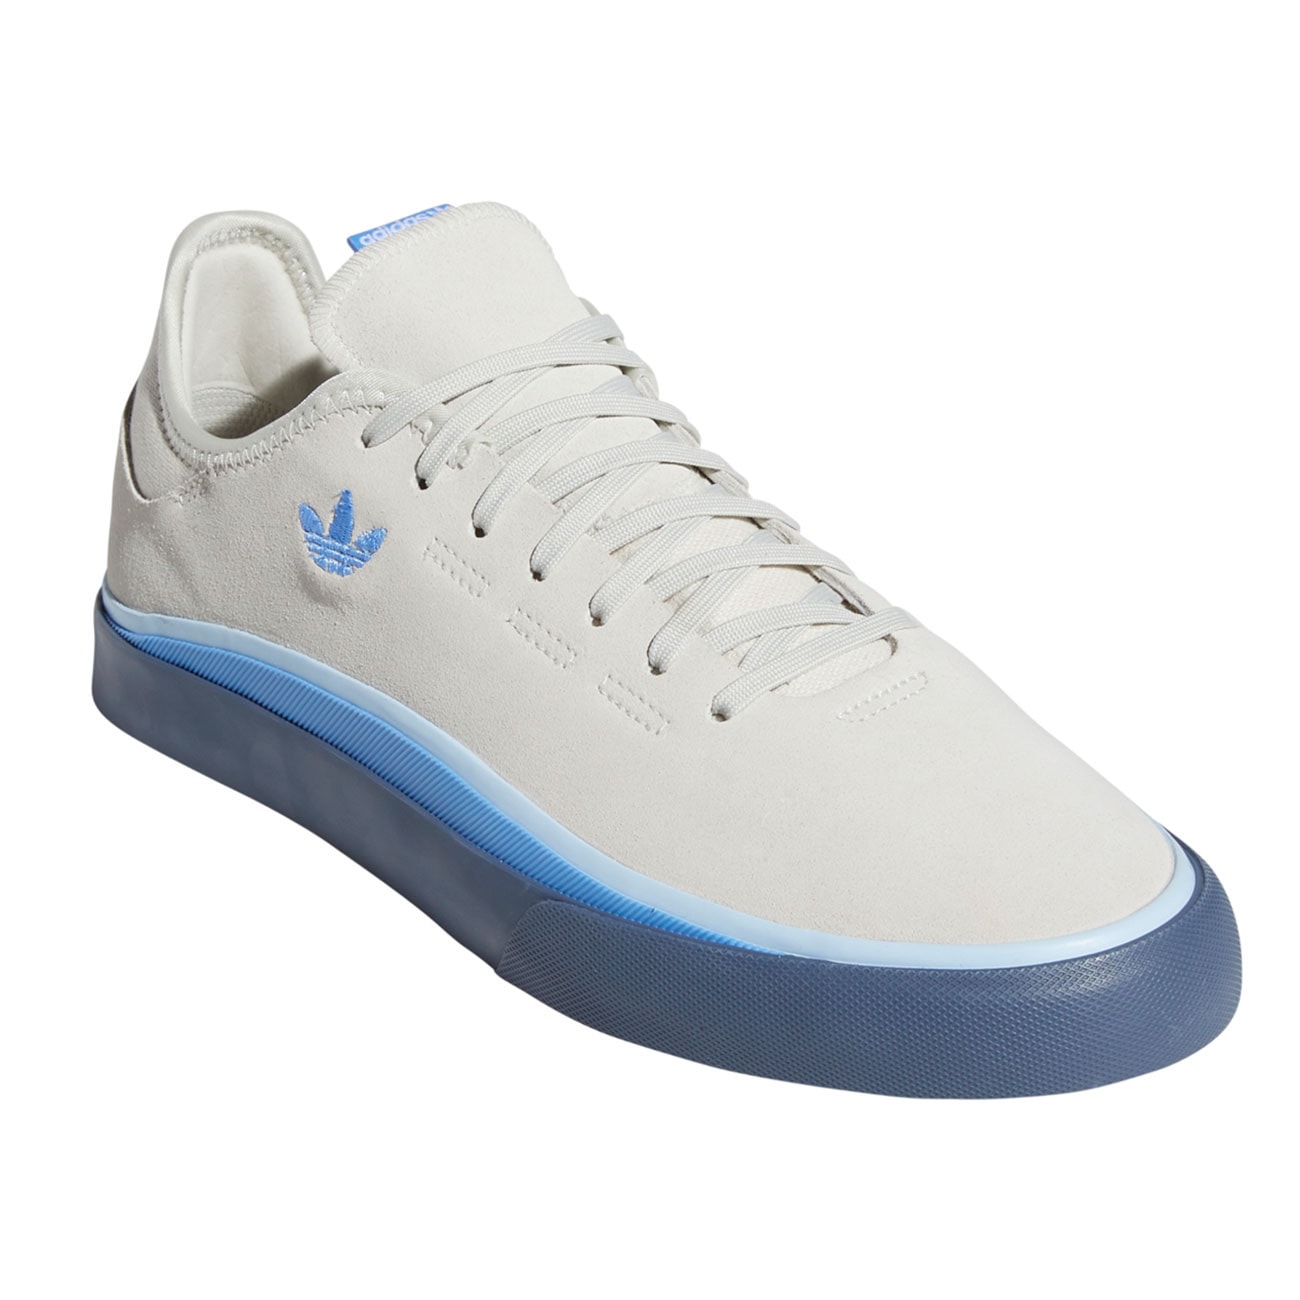 Resume isolation truth Sneakers Adidas Sabalo raw white/glow blue/real blue | Snowboard Zezula